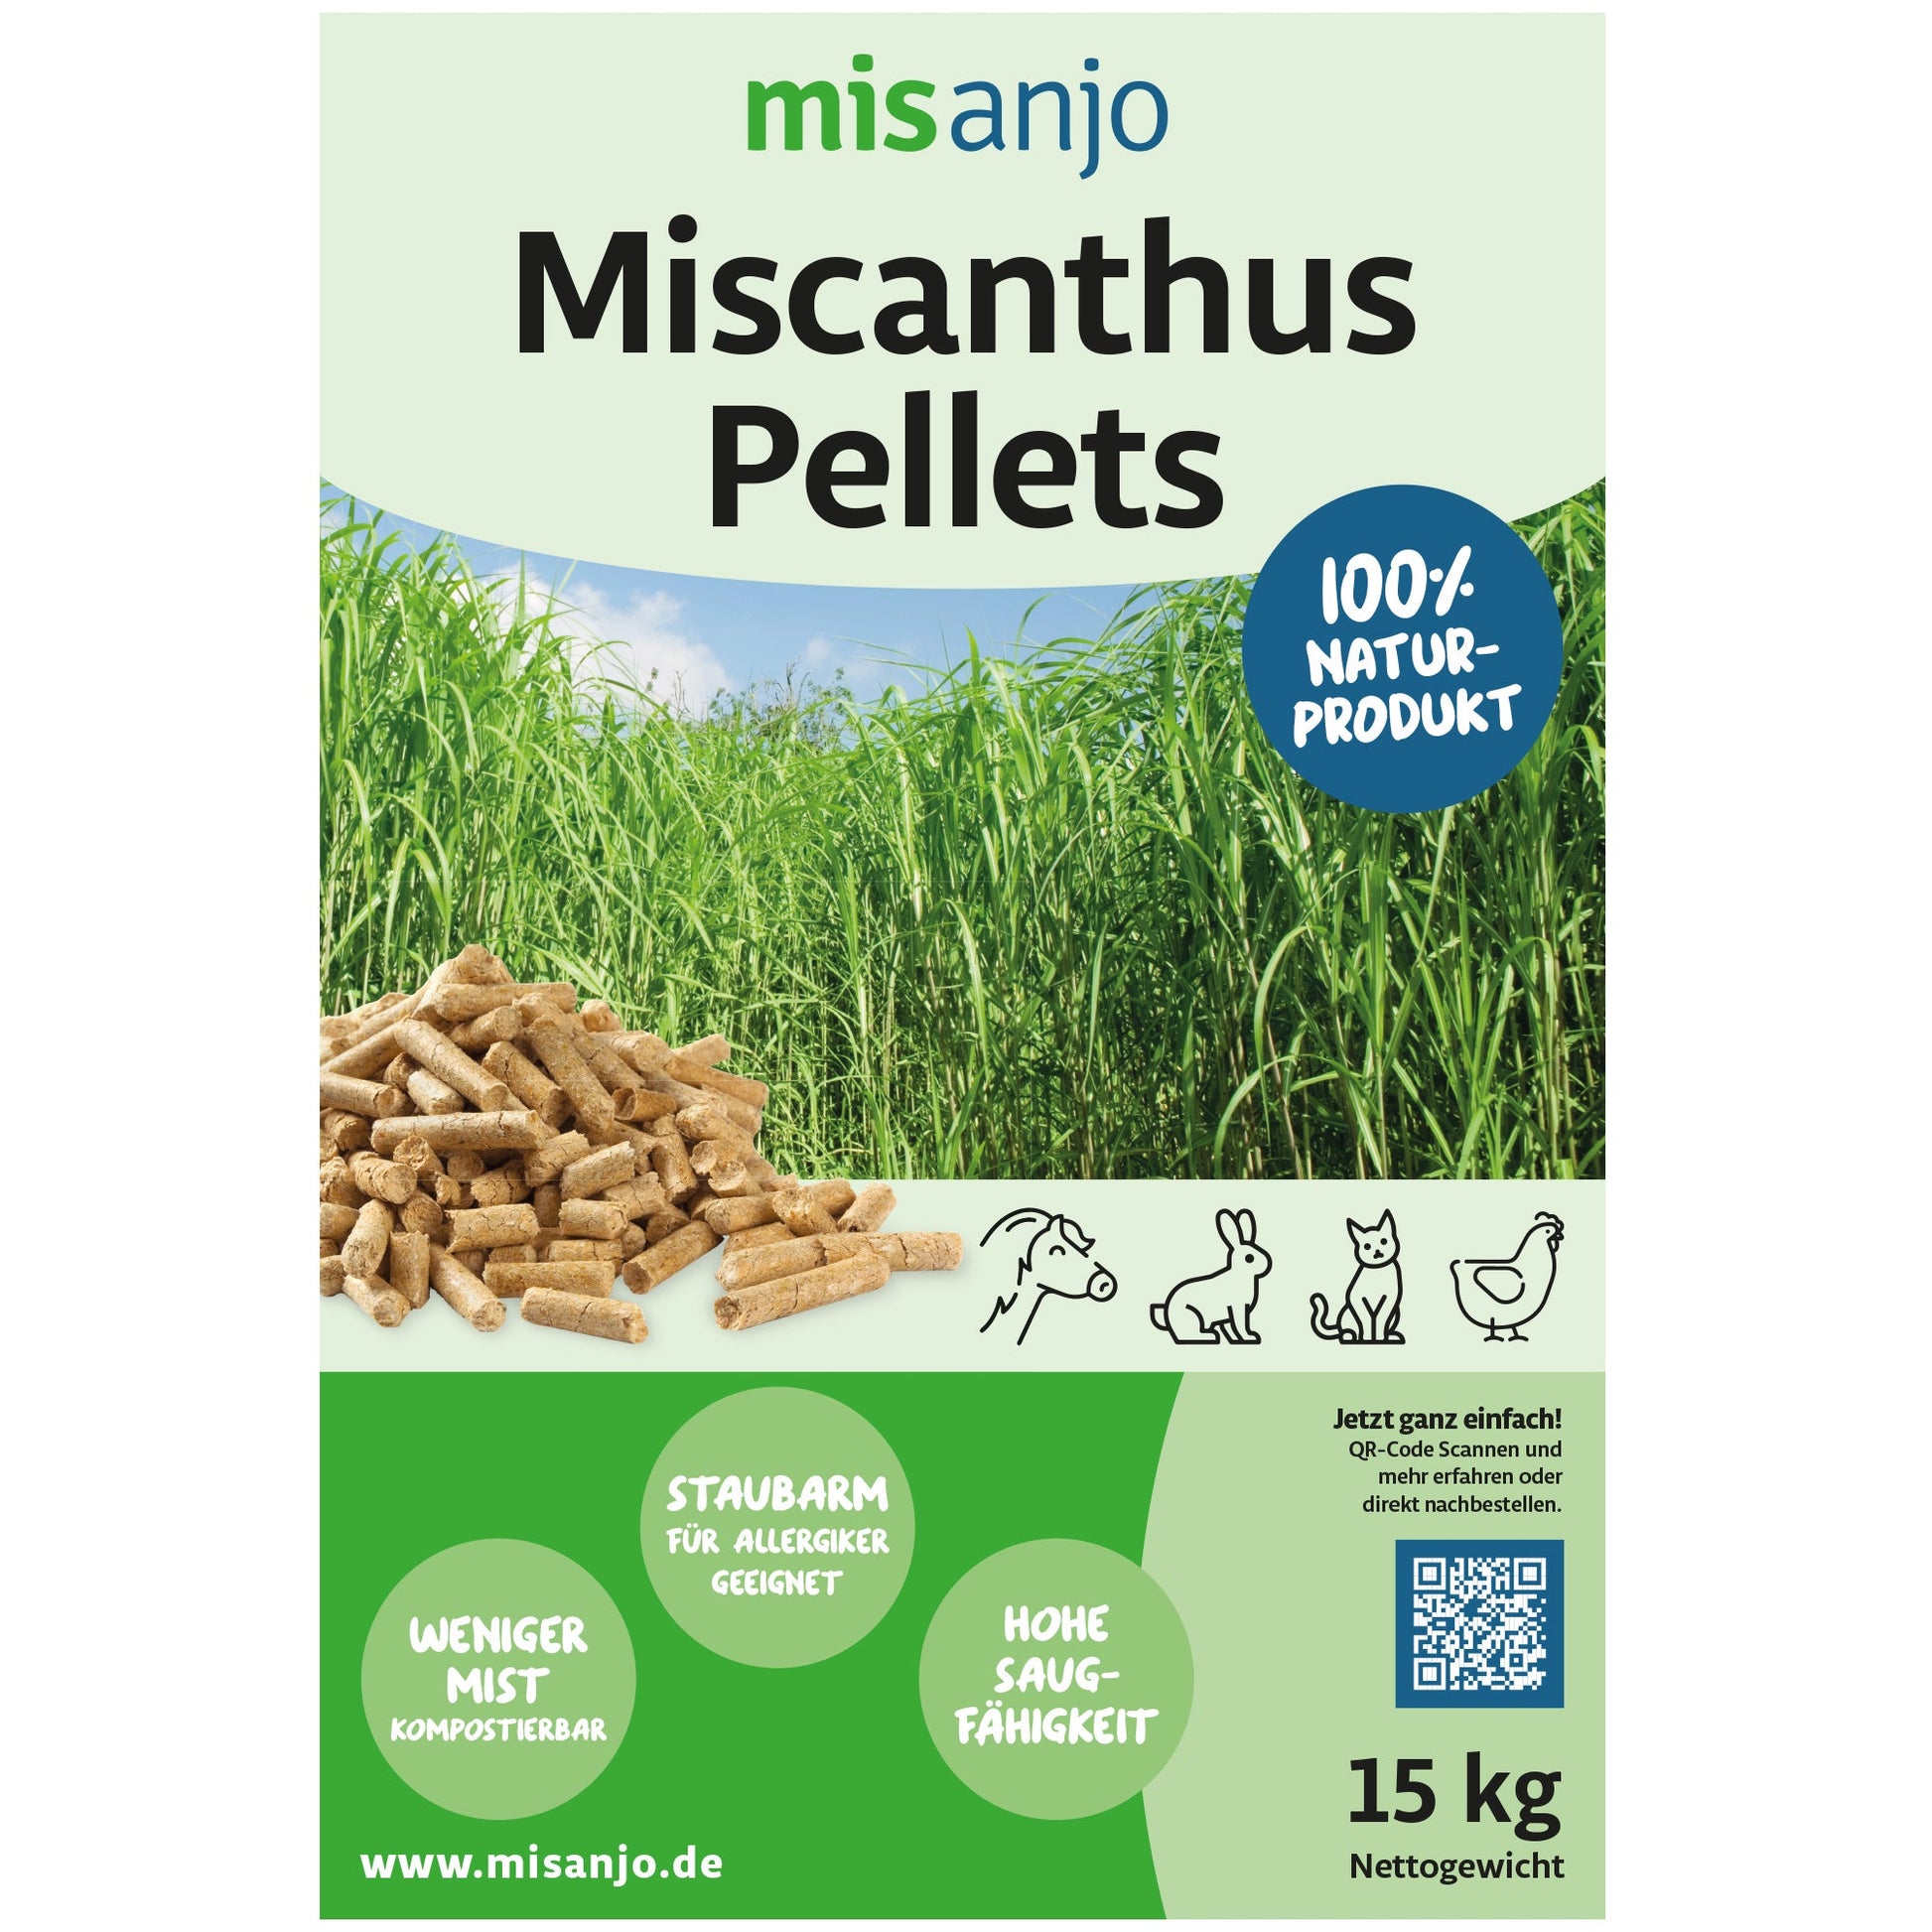 Miscanthus Pellets 15 kg Naturprodukt, staubarm, hohe Saugfähigkeit